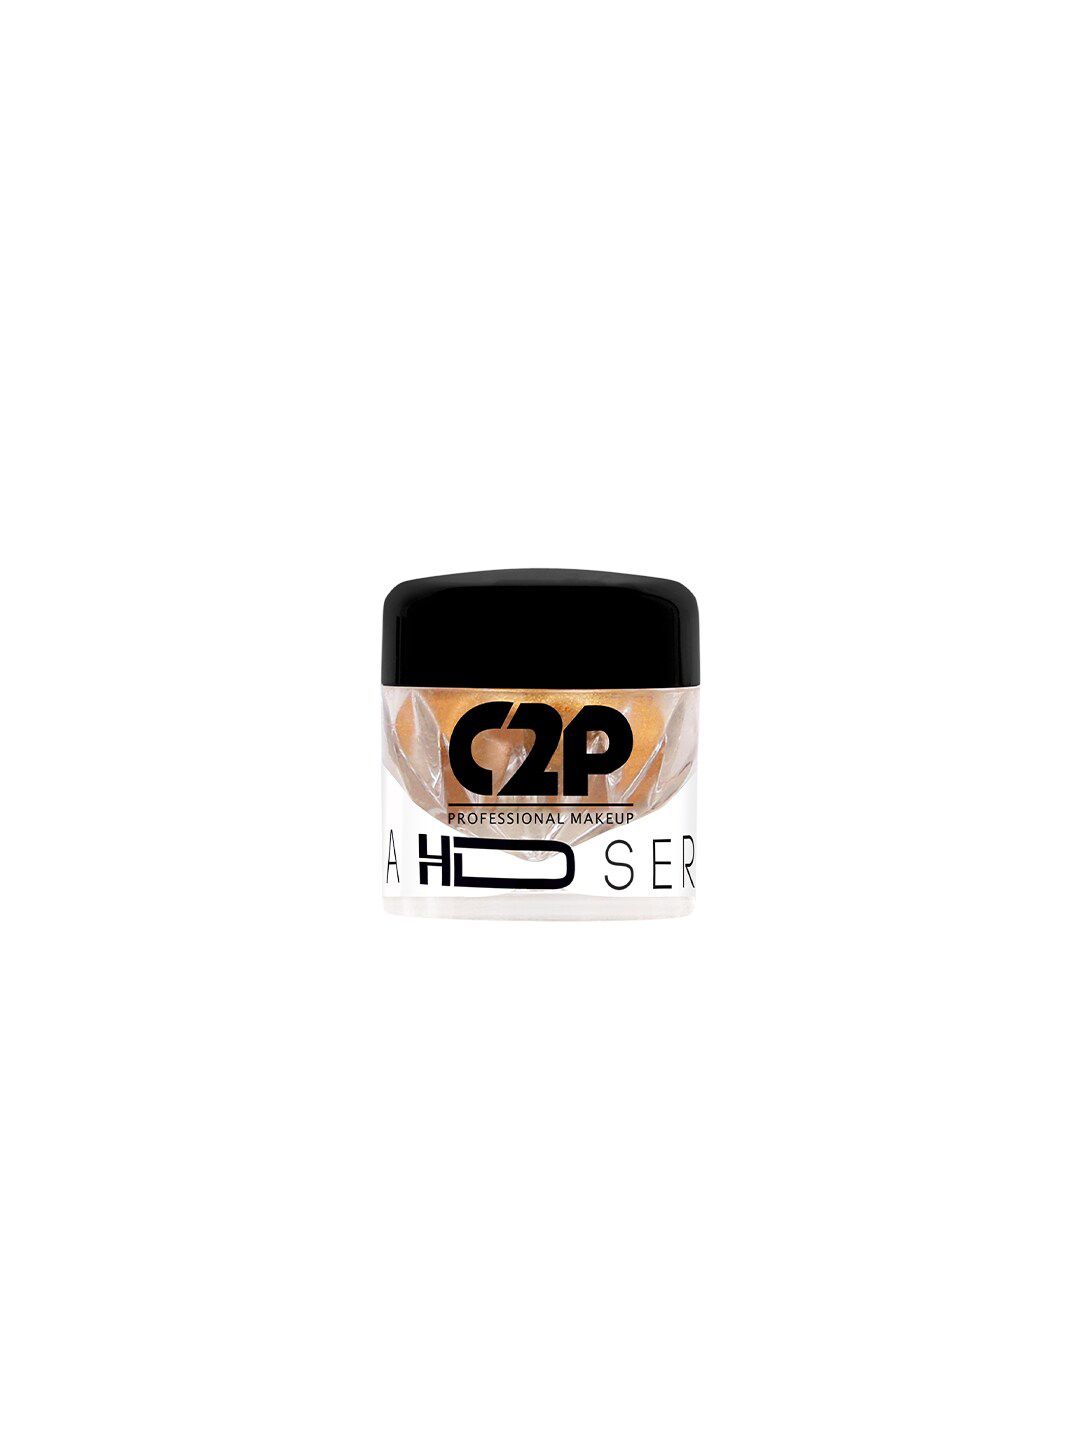 C2P PROFESSIONAL MAKEUP HD Loose Precious Pigments Eyeshadow - Trending 11 Price in India